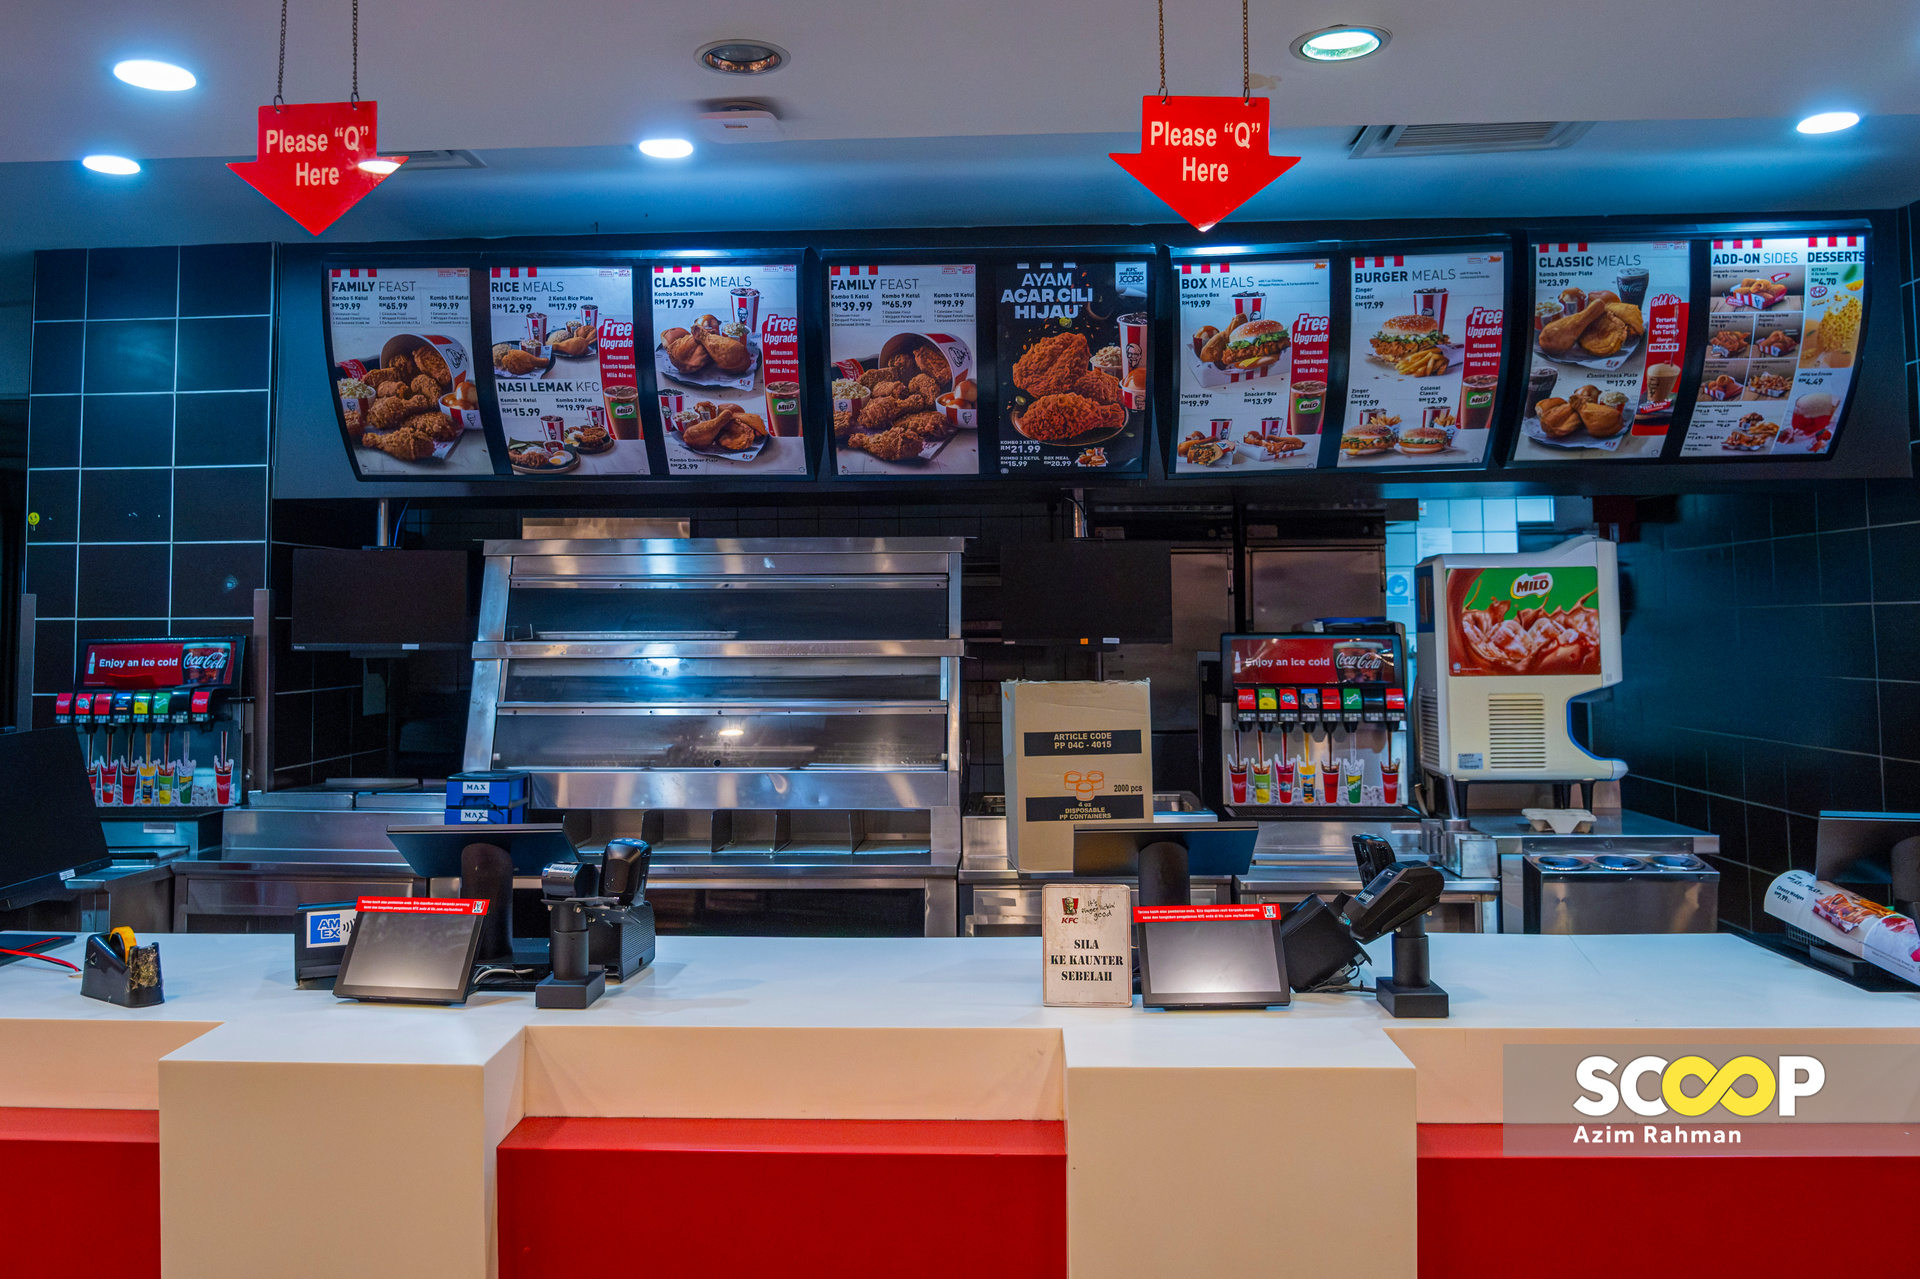 KFC staff reveal persistent harassment with 'Murderer', 'Israel' label